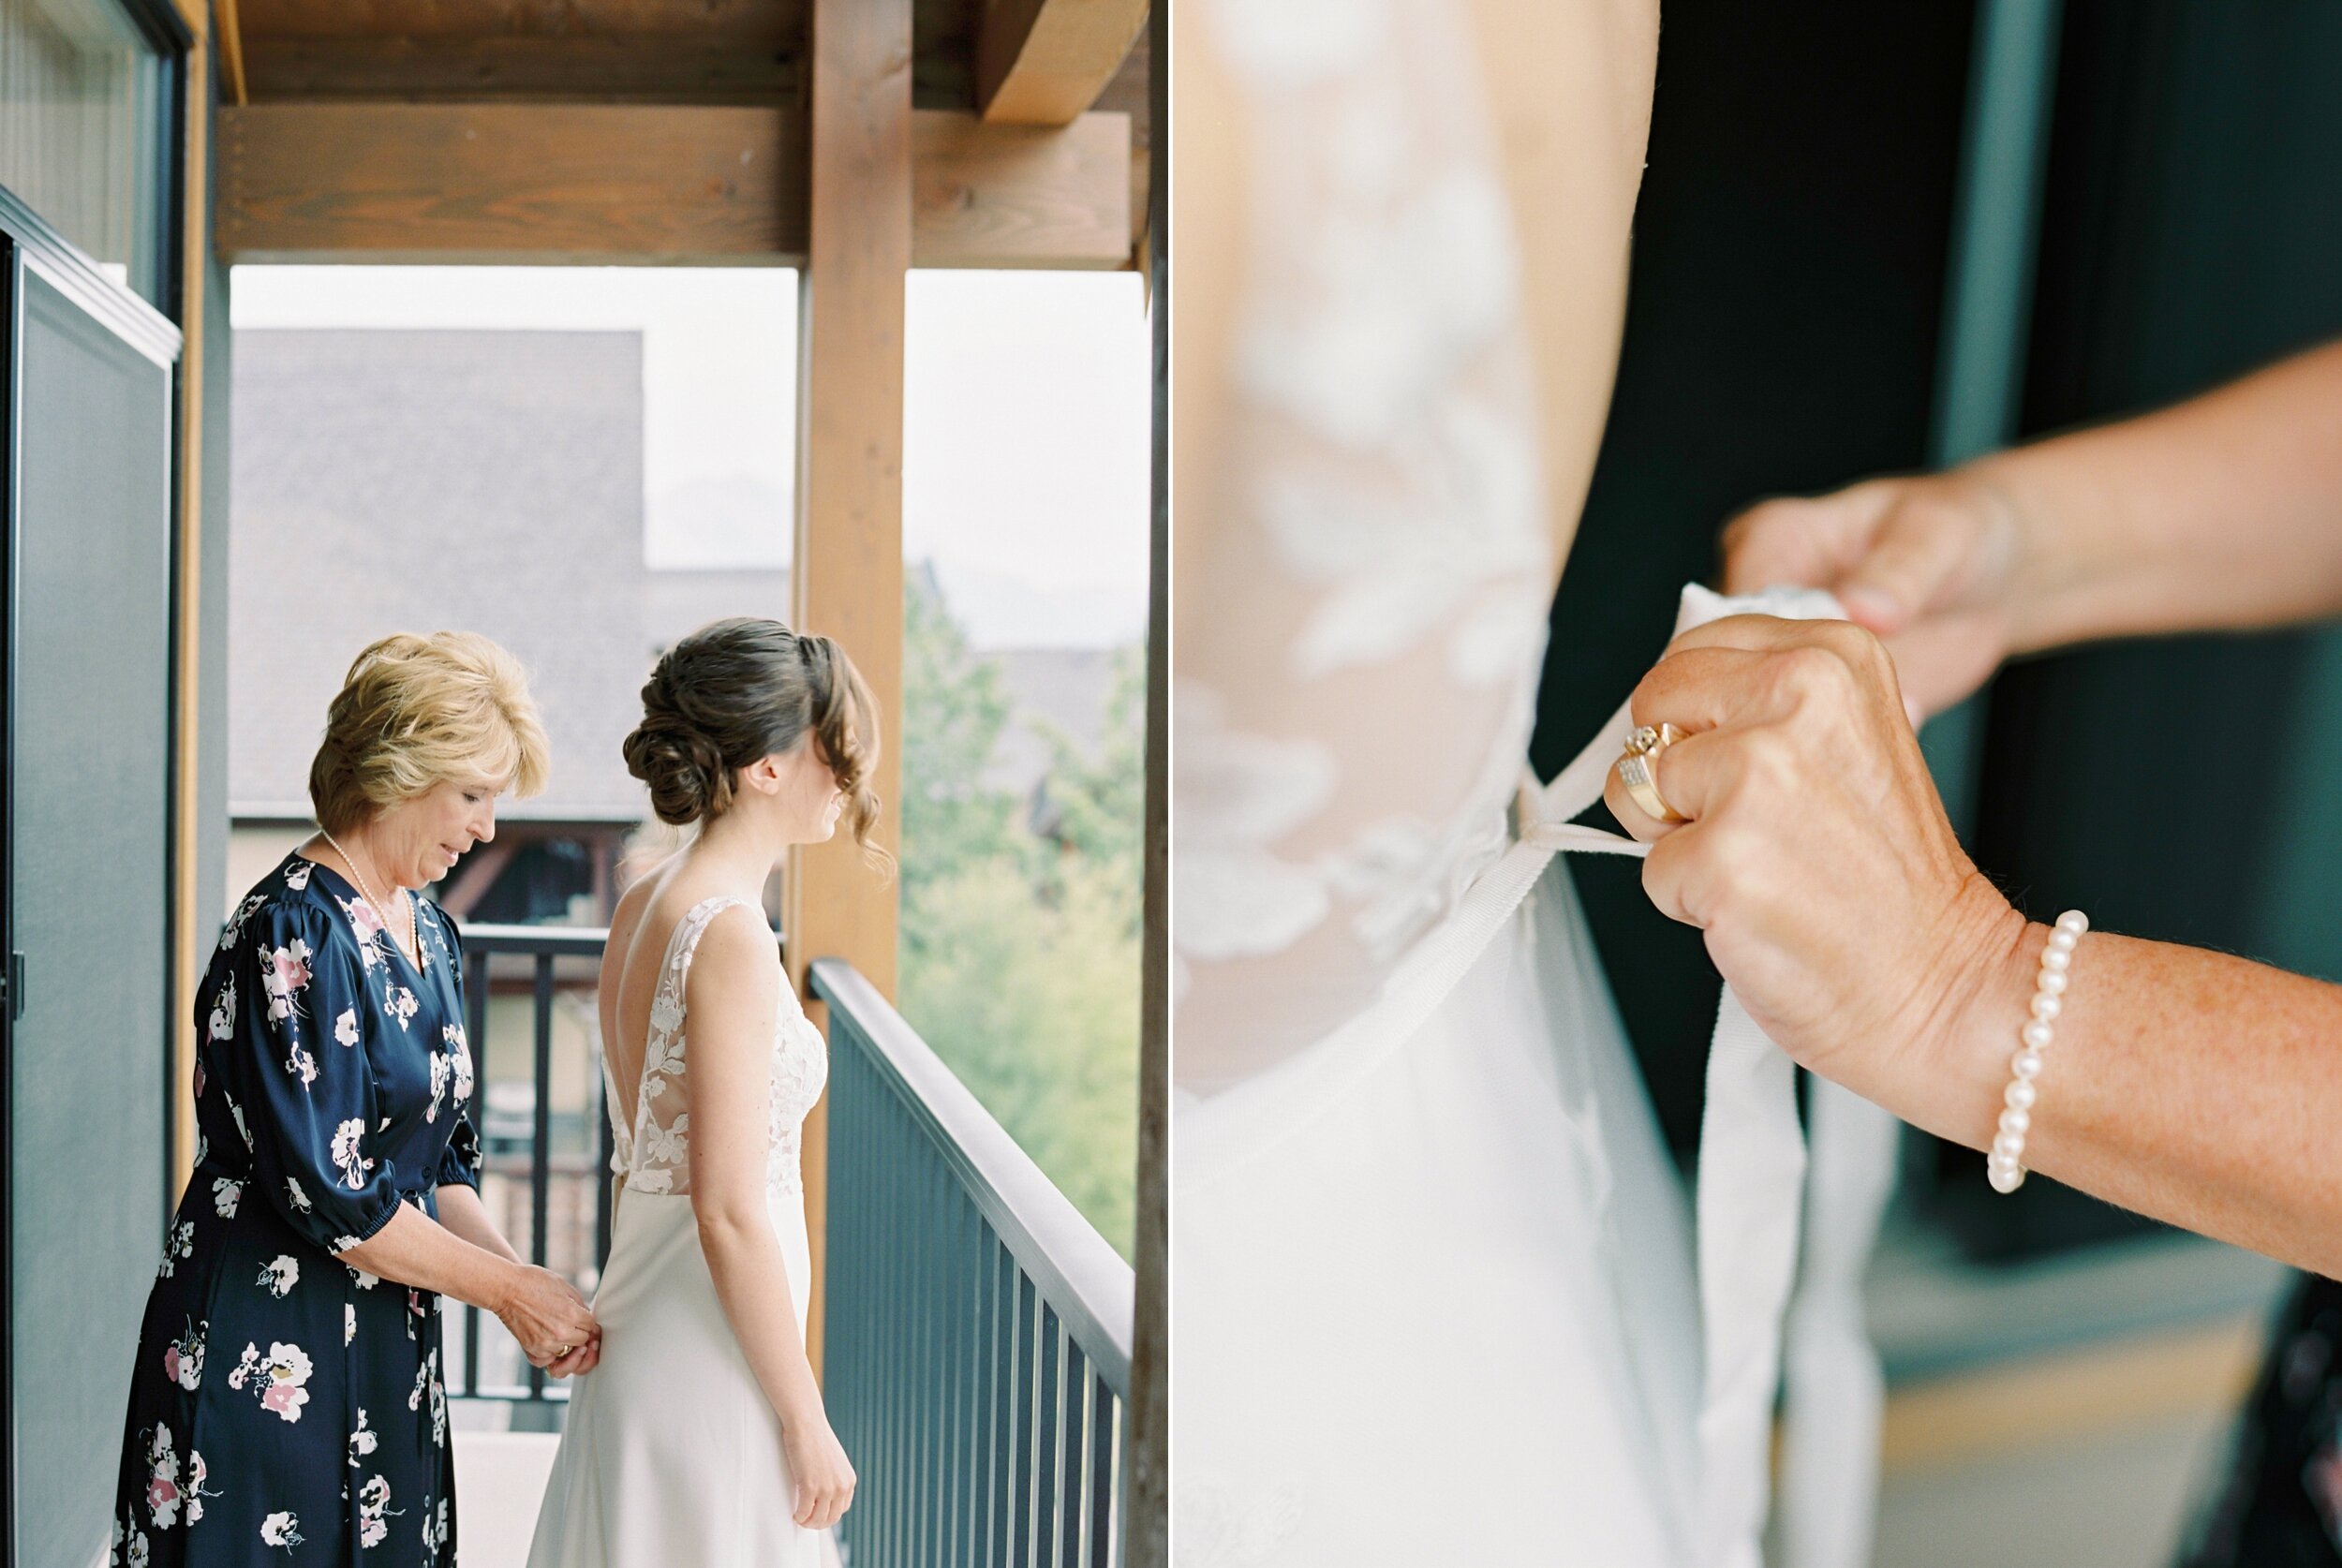  Bride getting ready | The Malcom Canmore Wedding Photographer | Fine Art film wedding photoraphy | portra 400 